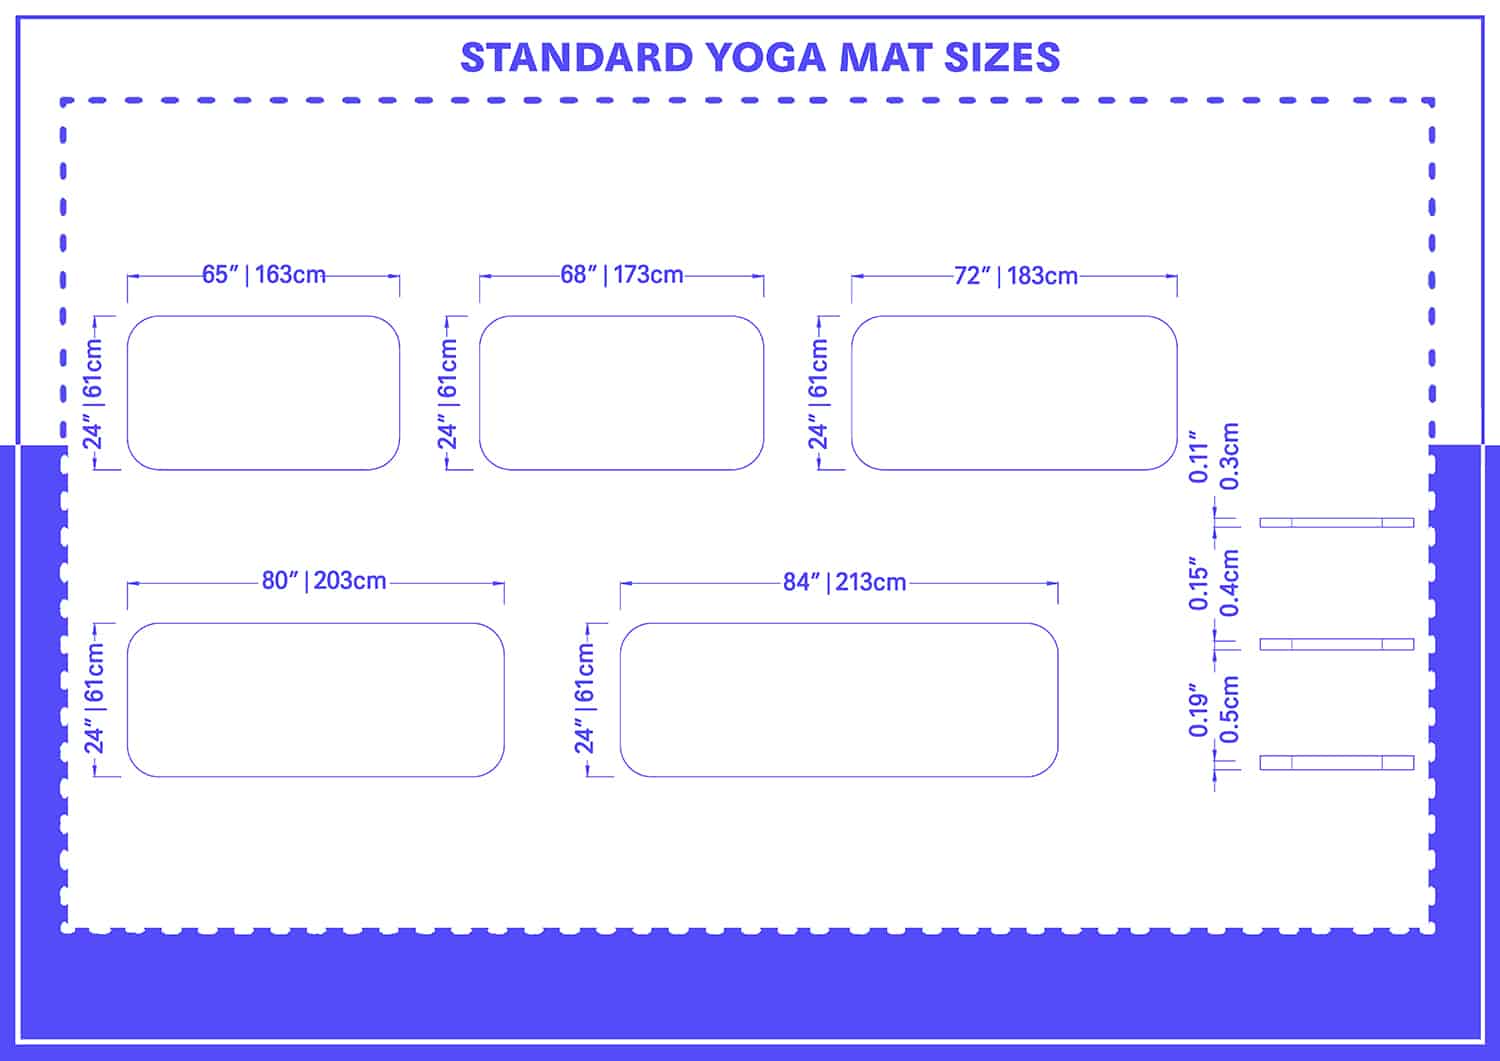 Standard Yoga Mat sizes